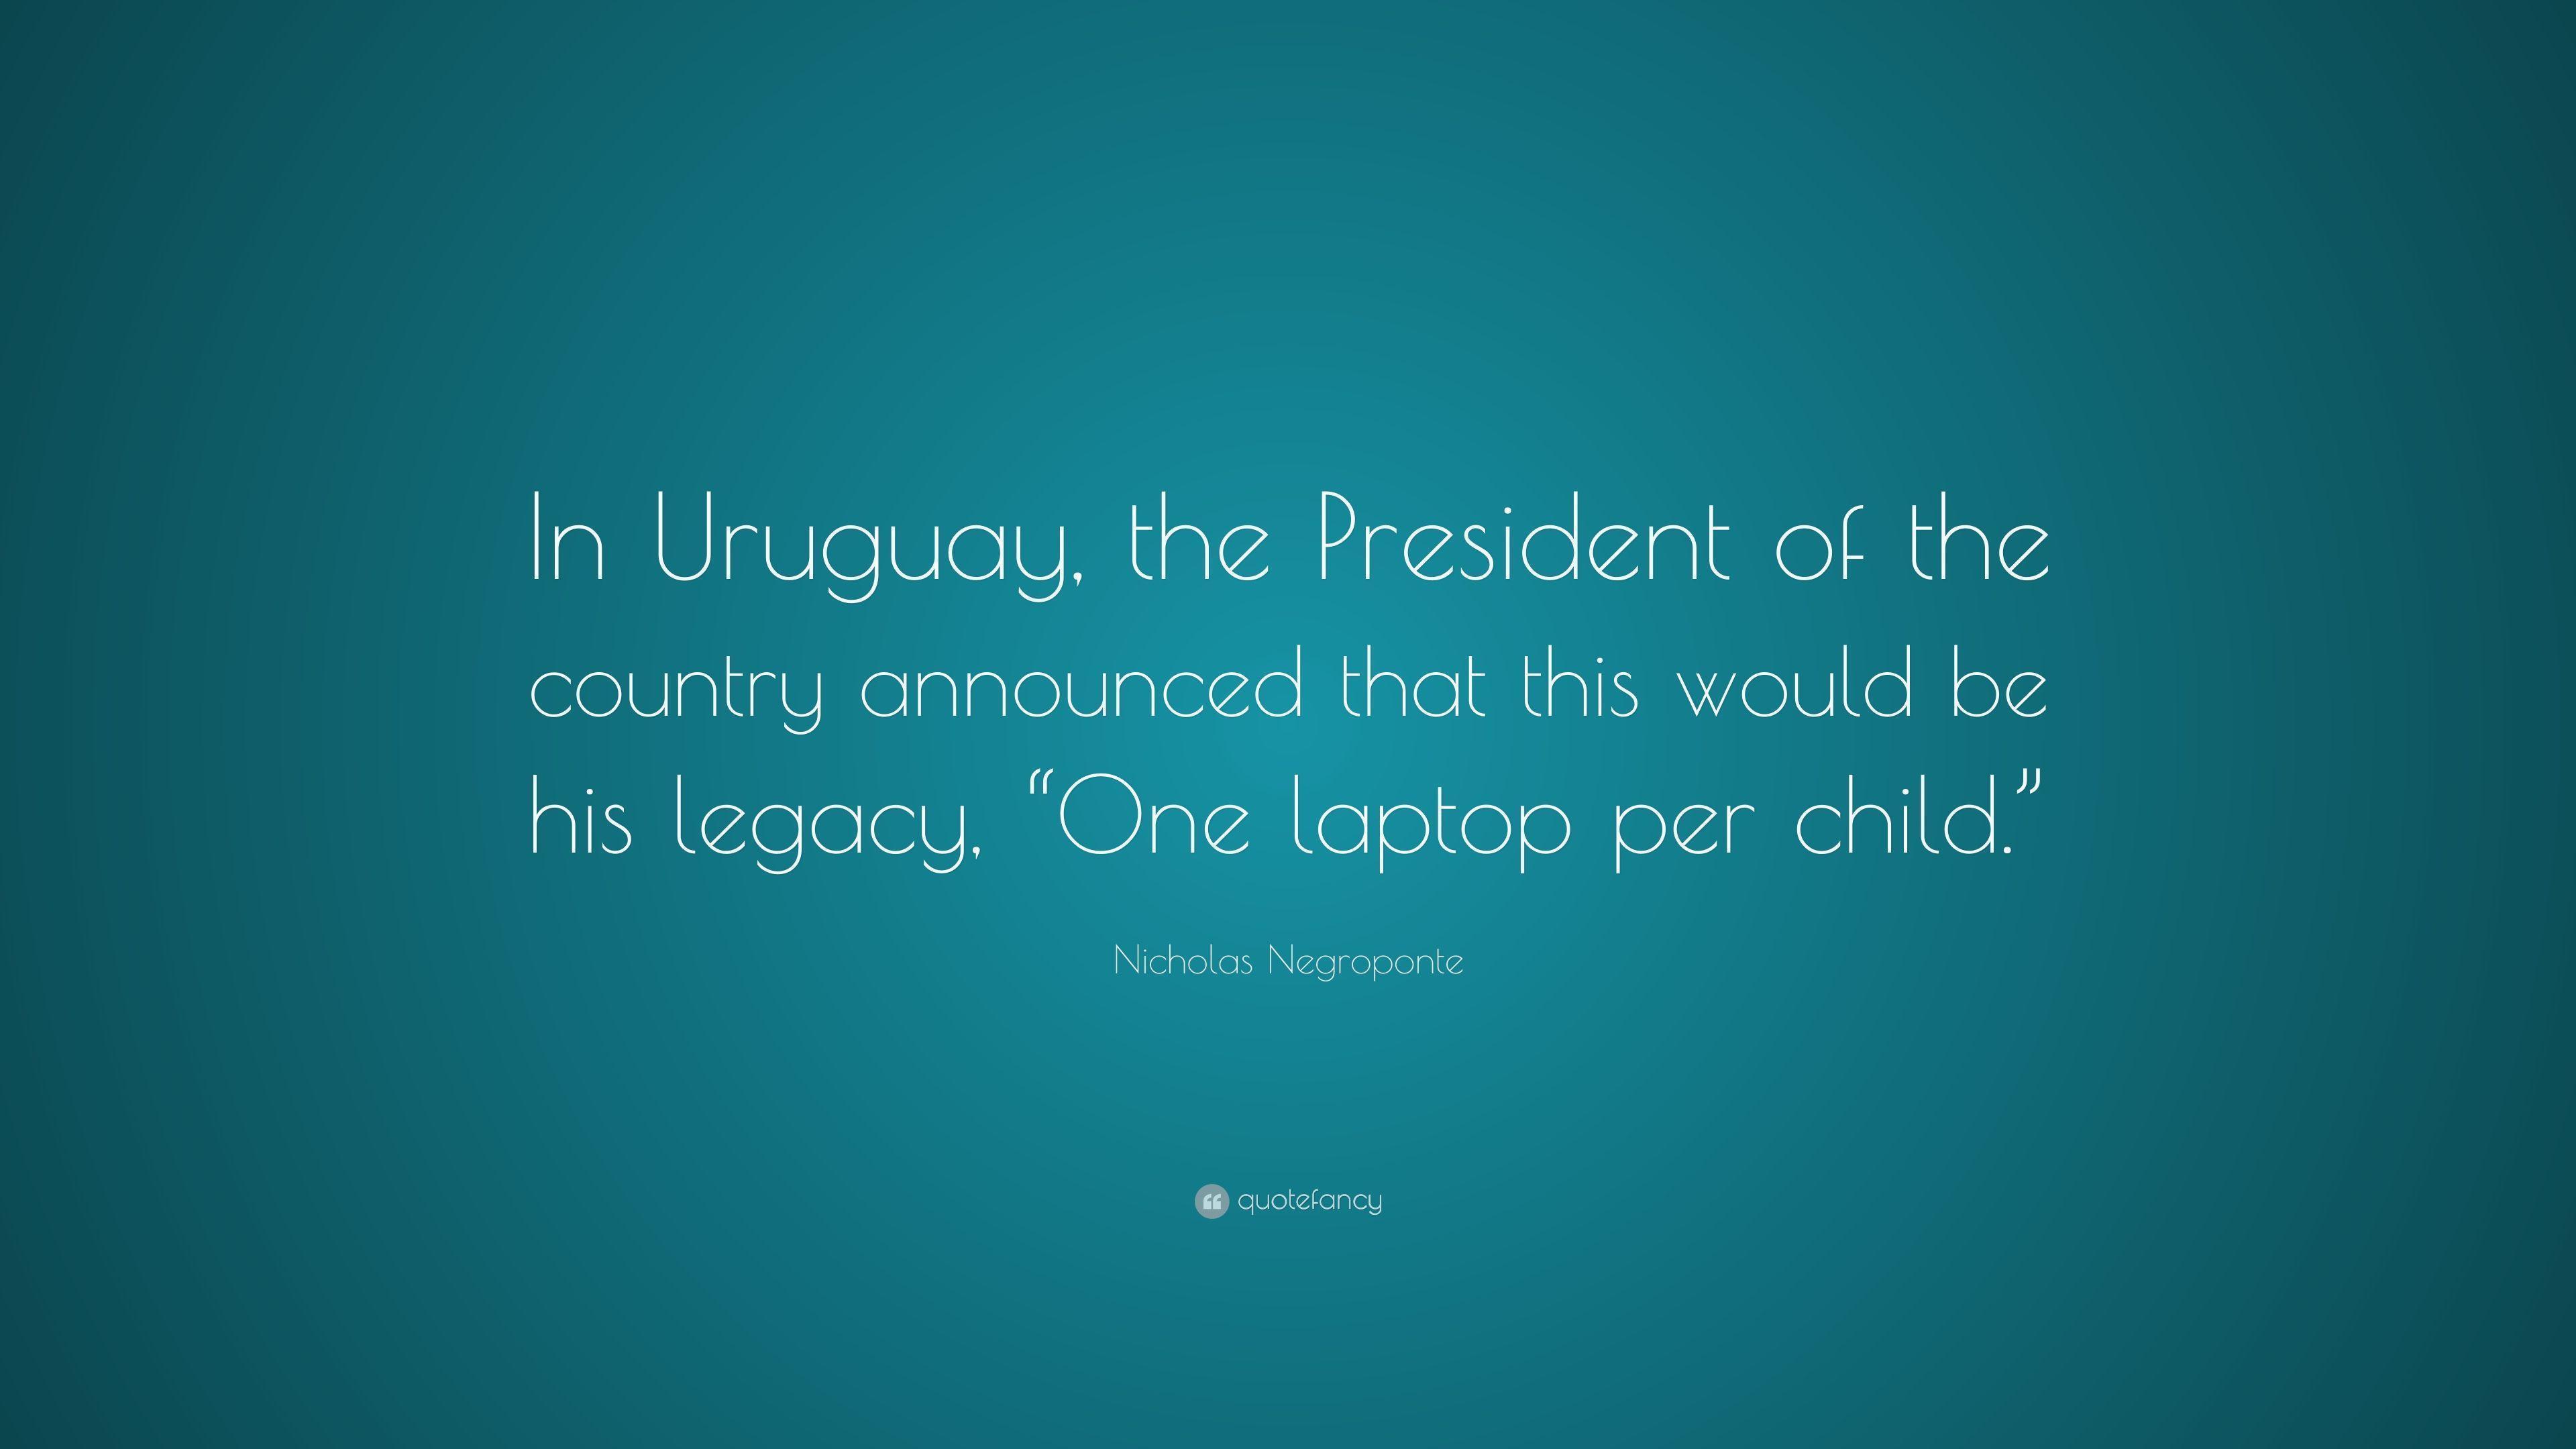 Nicholas Negroponte Quote: “In Uruguay, the President